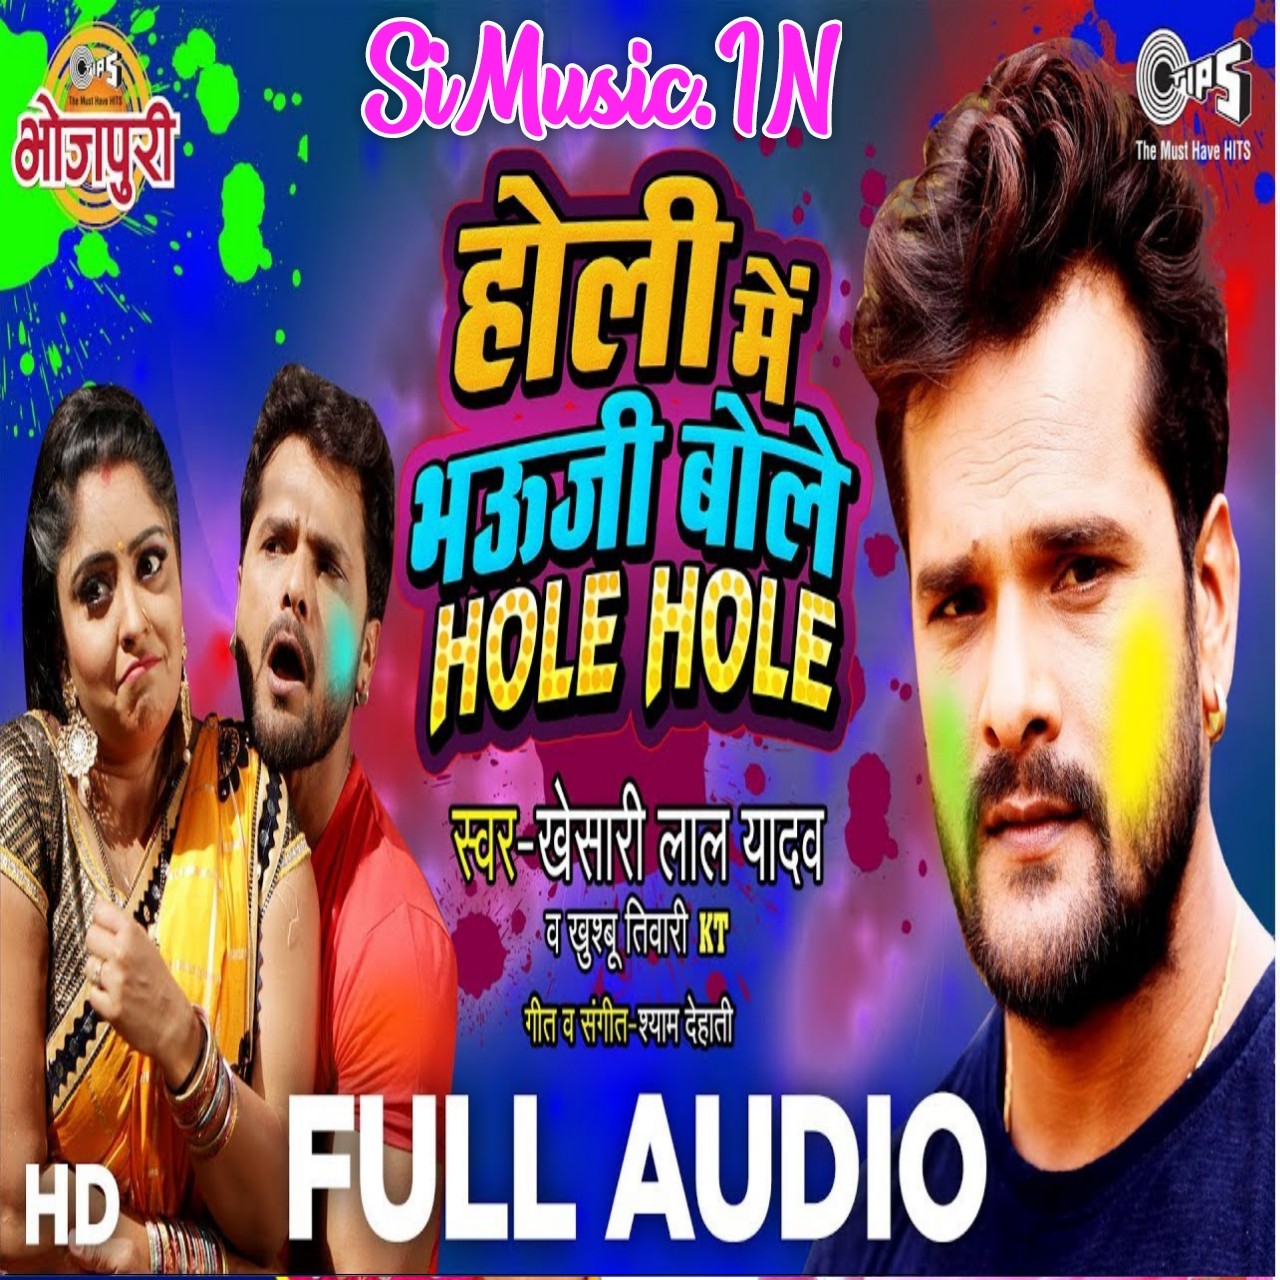 Holi Me Bhauji Bole Hole Hole (Khesari Lal Yadav, Khushboo Tiwari KT) 2020 Mp3 Songs